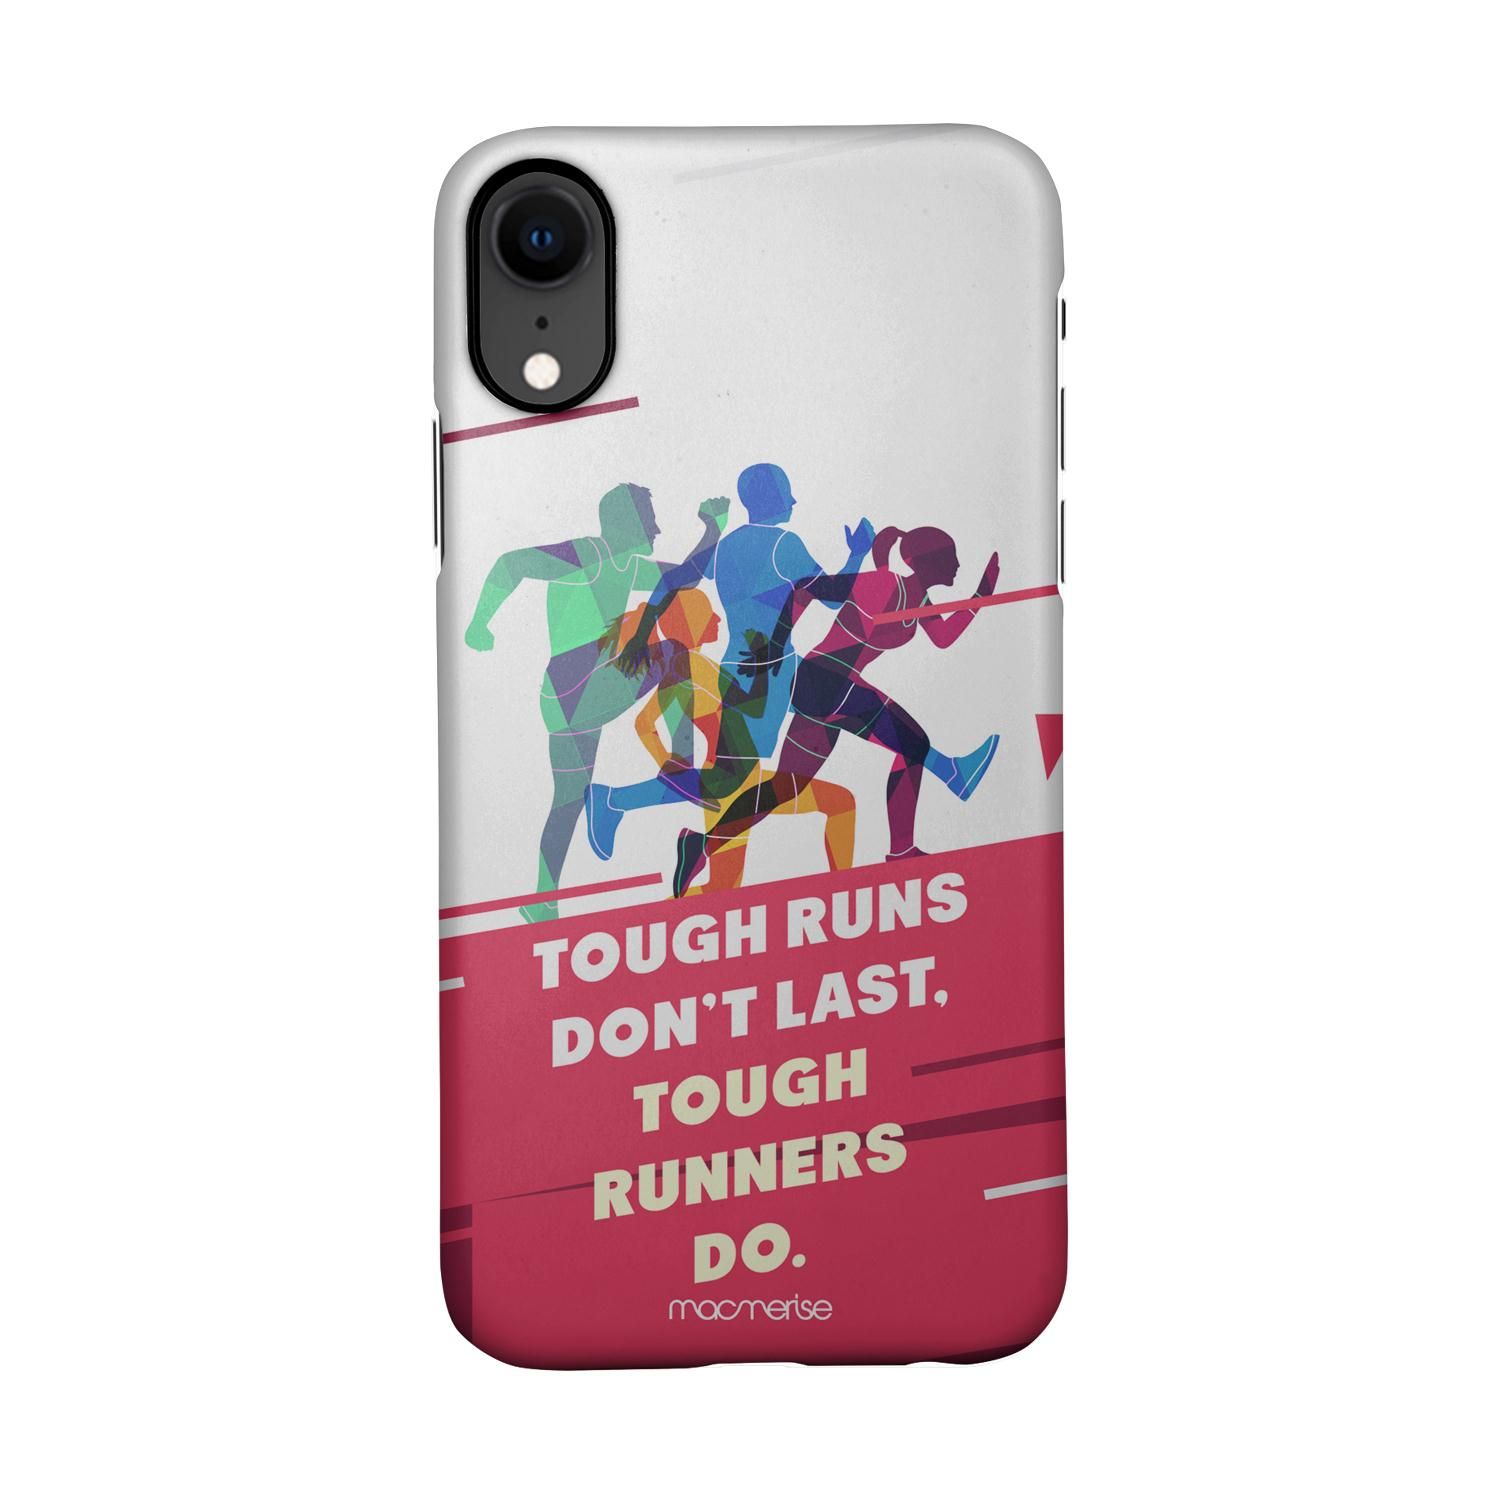 Tough Runners - Sleek Phone Case for iPhone XR